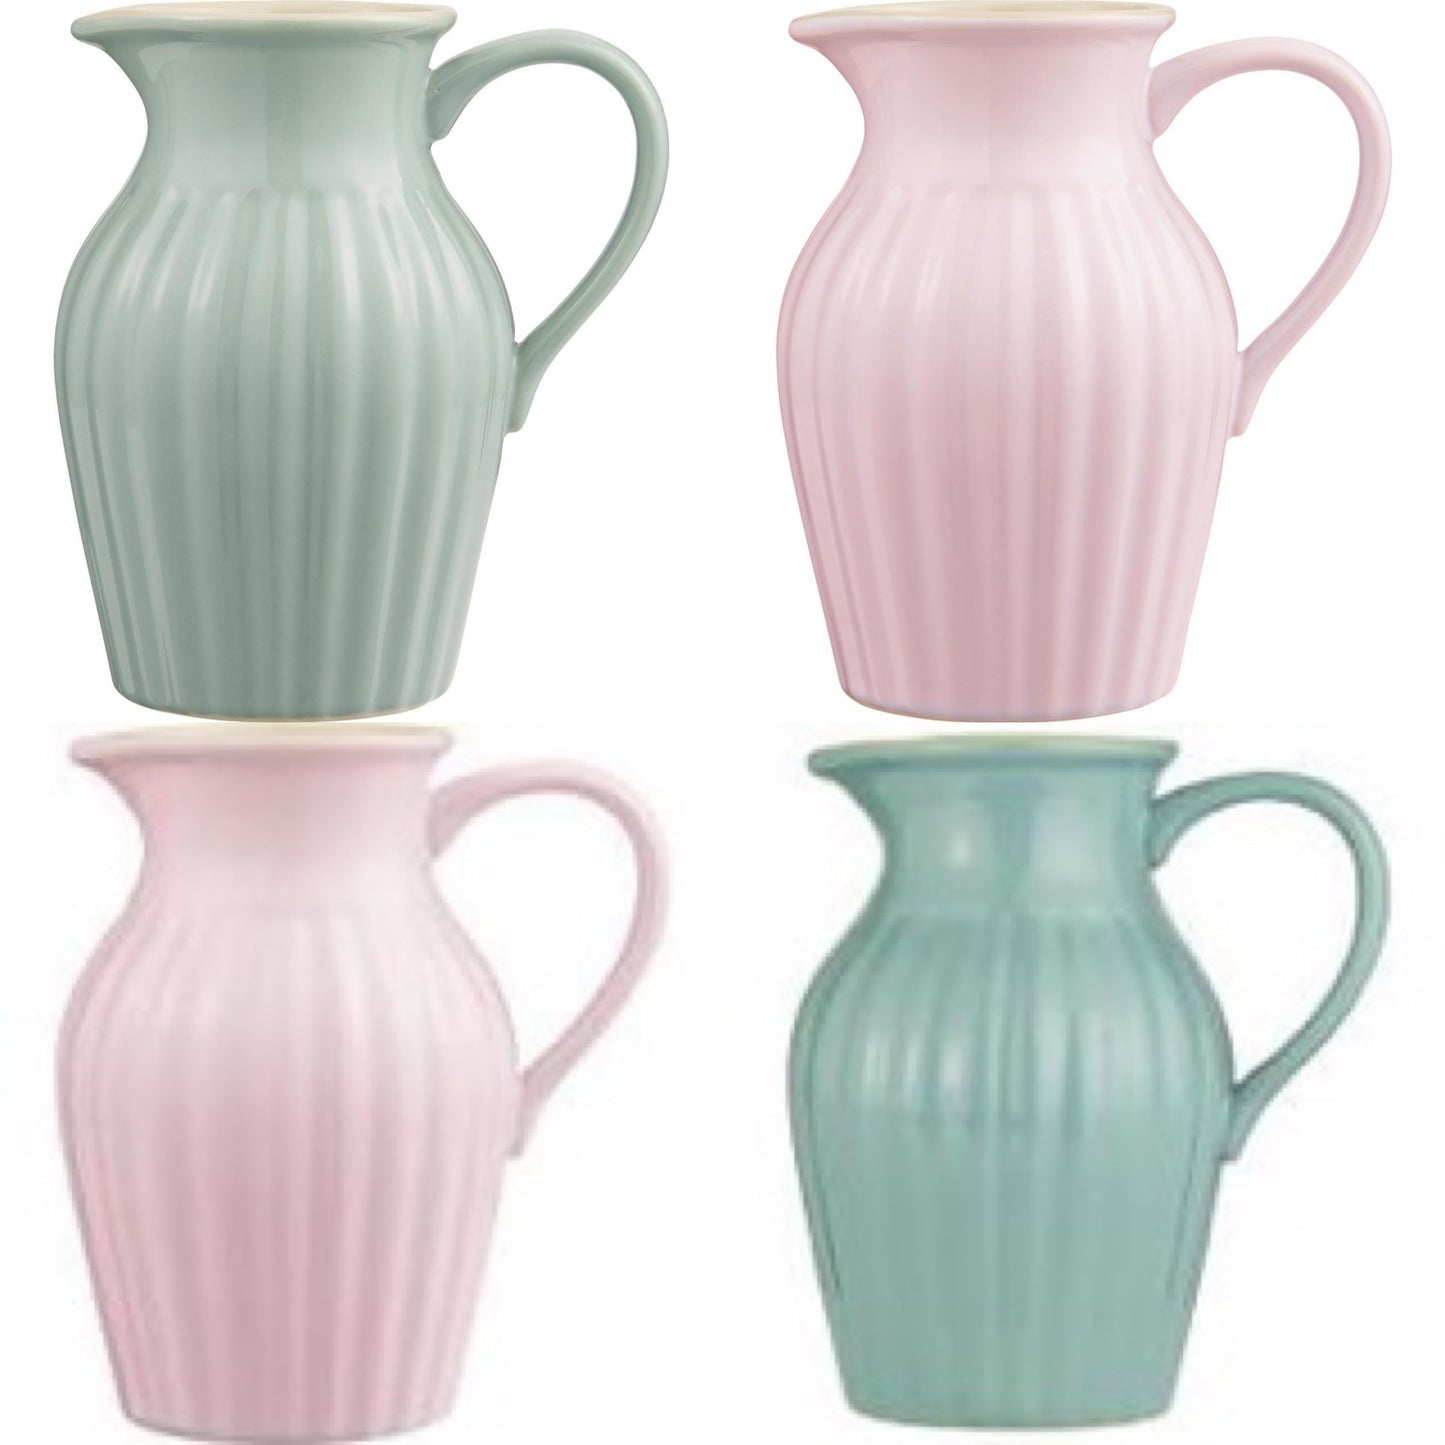 Stoneware pitcher jug